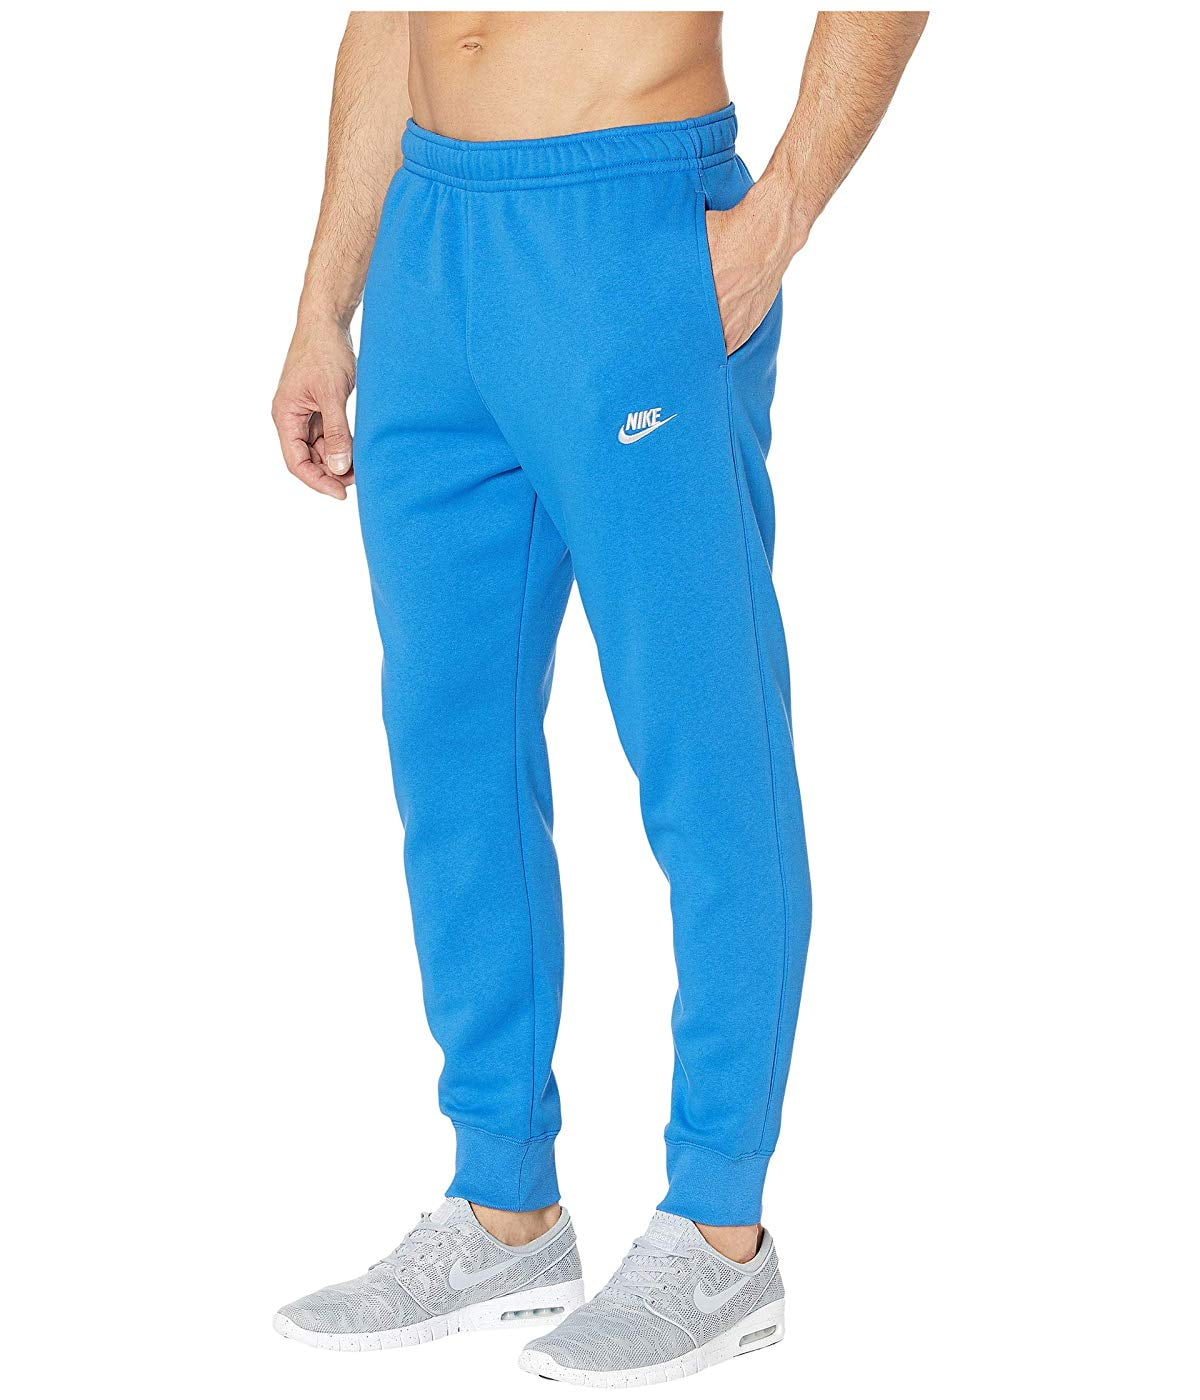 Nike NSW Jogger Blue/Light Photo - Walmart.com